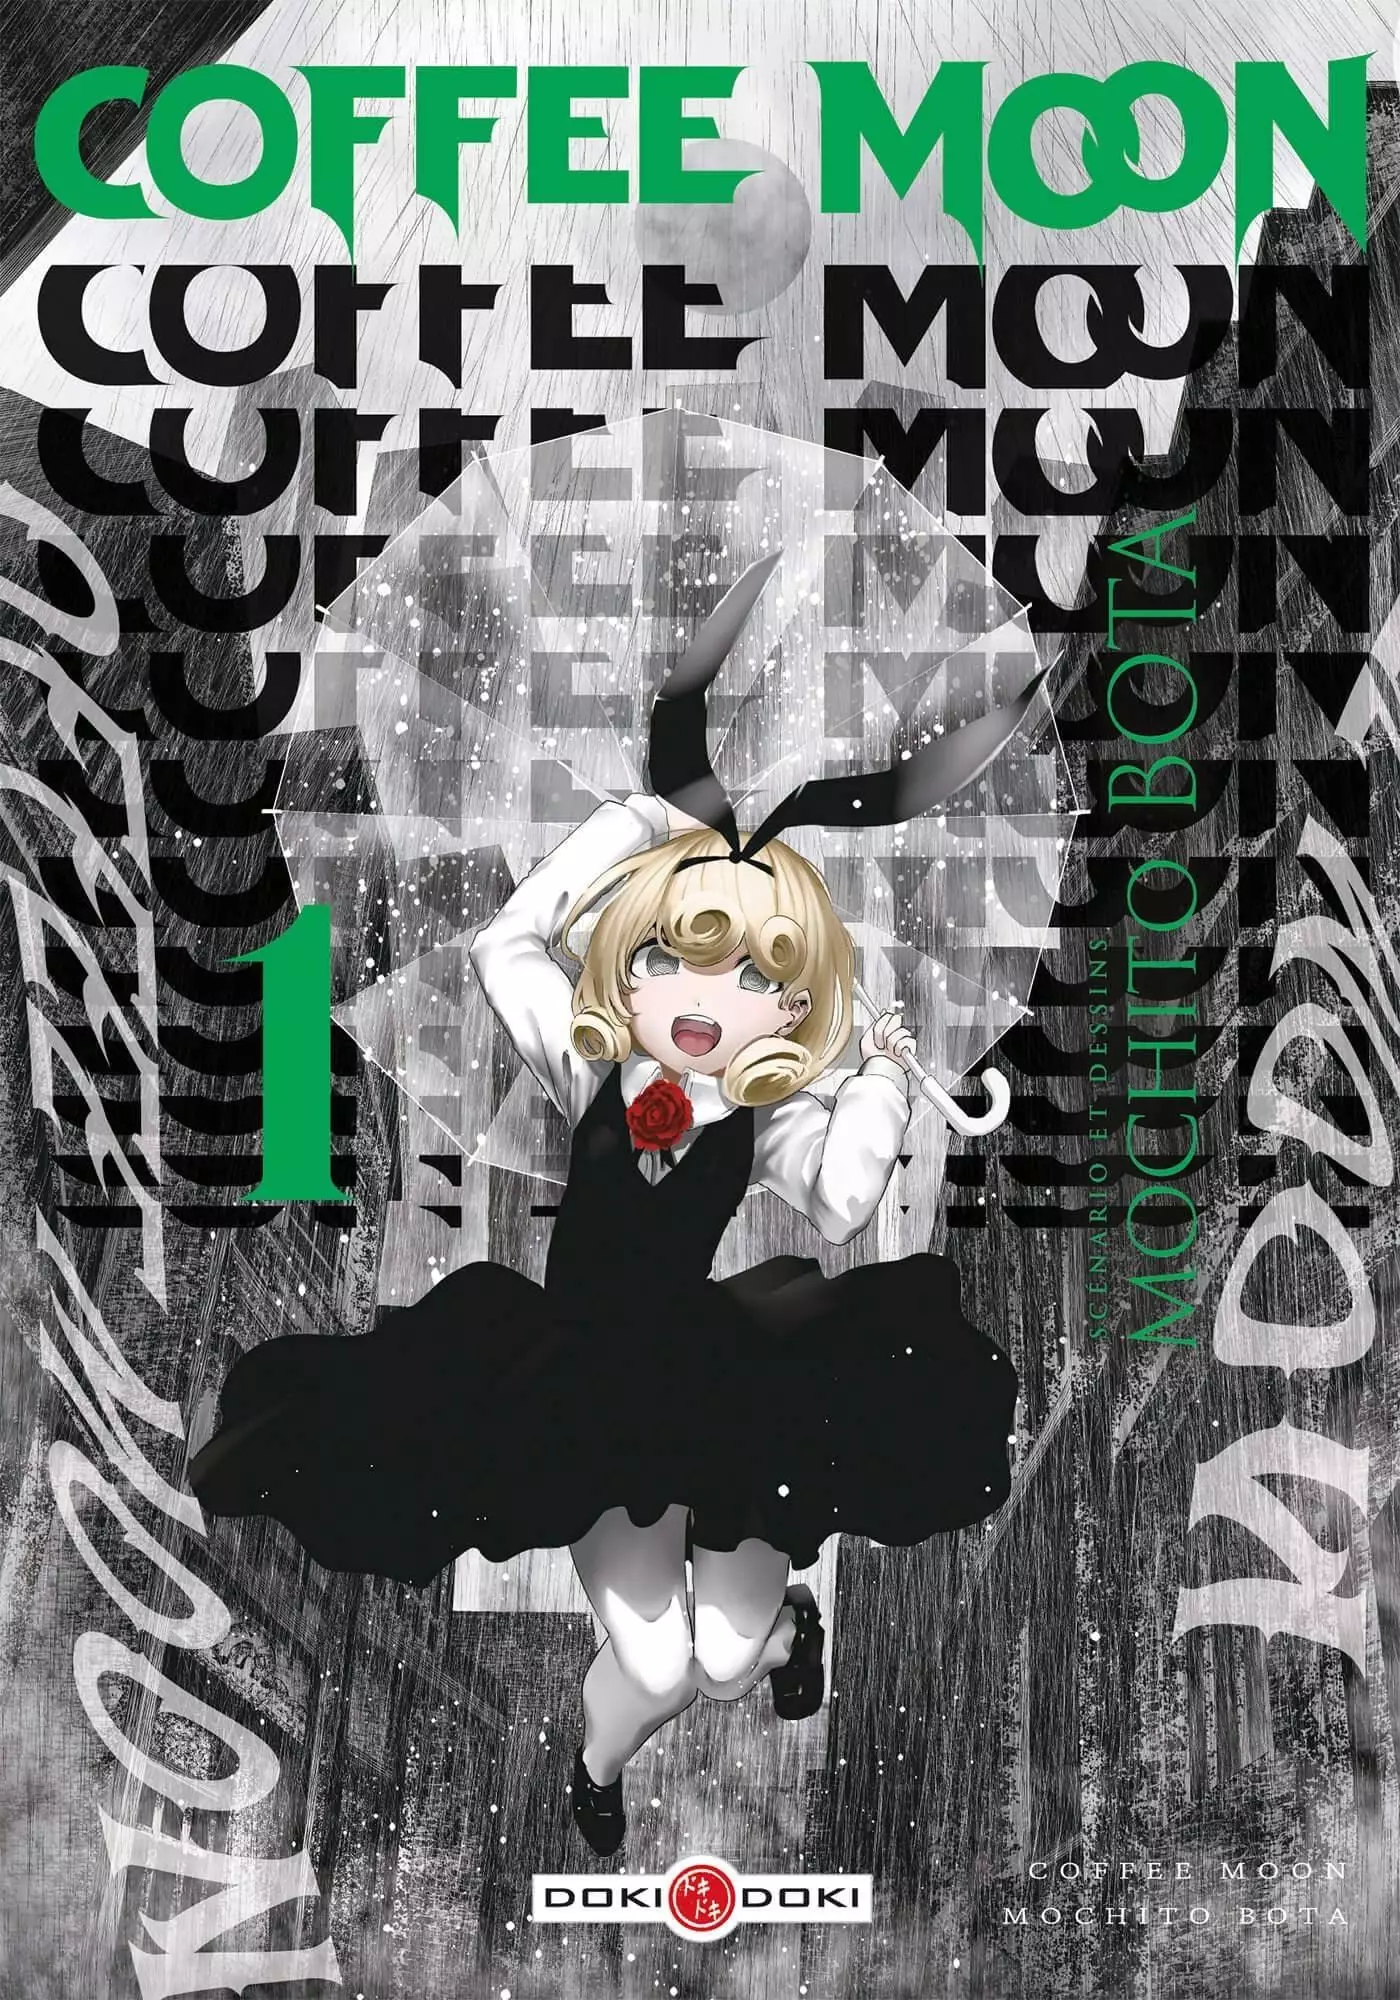 Coffee Moon Coffee-moon-1-doki